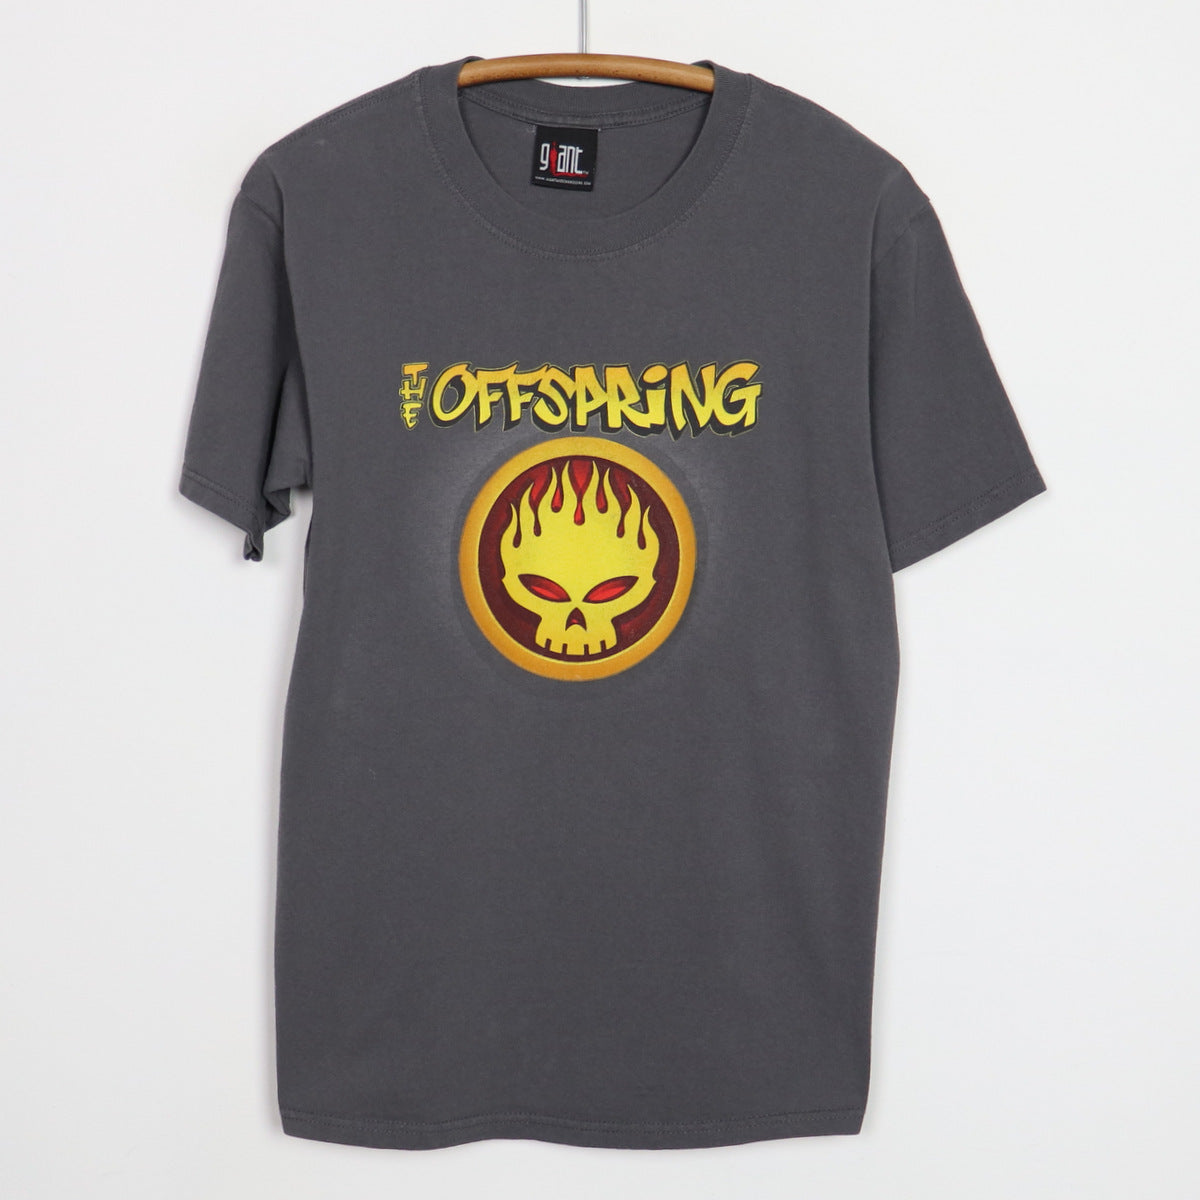 2000 Offspring Conspiracy Of One Tour Shirt